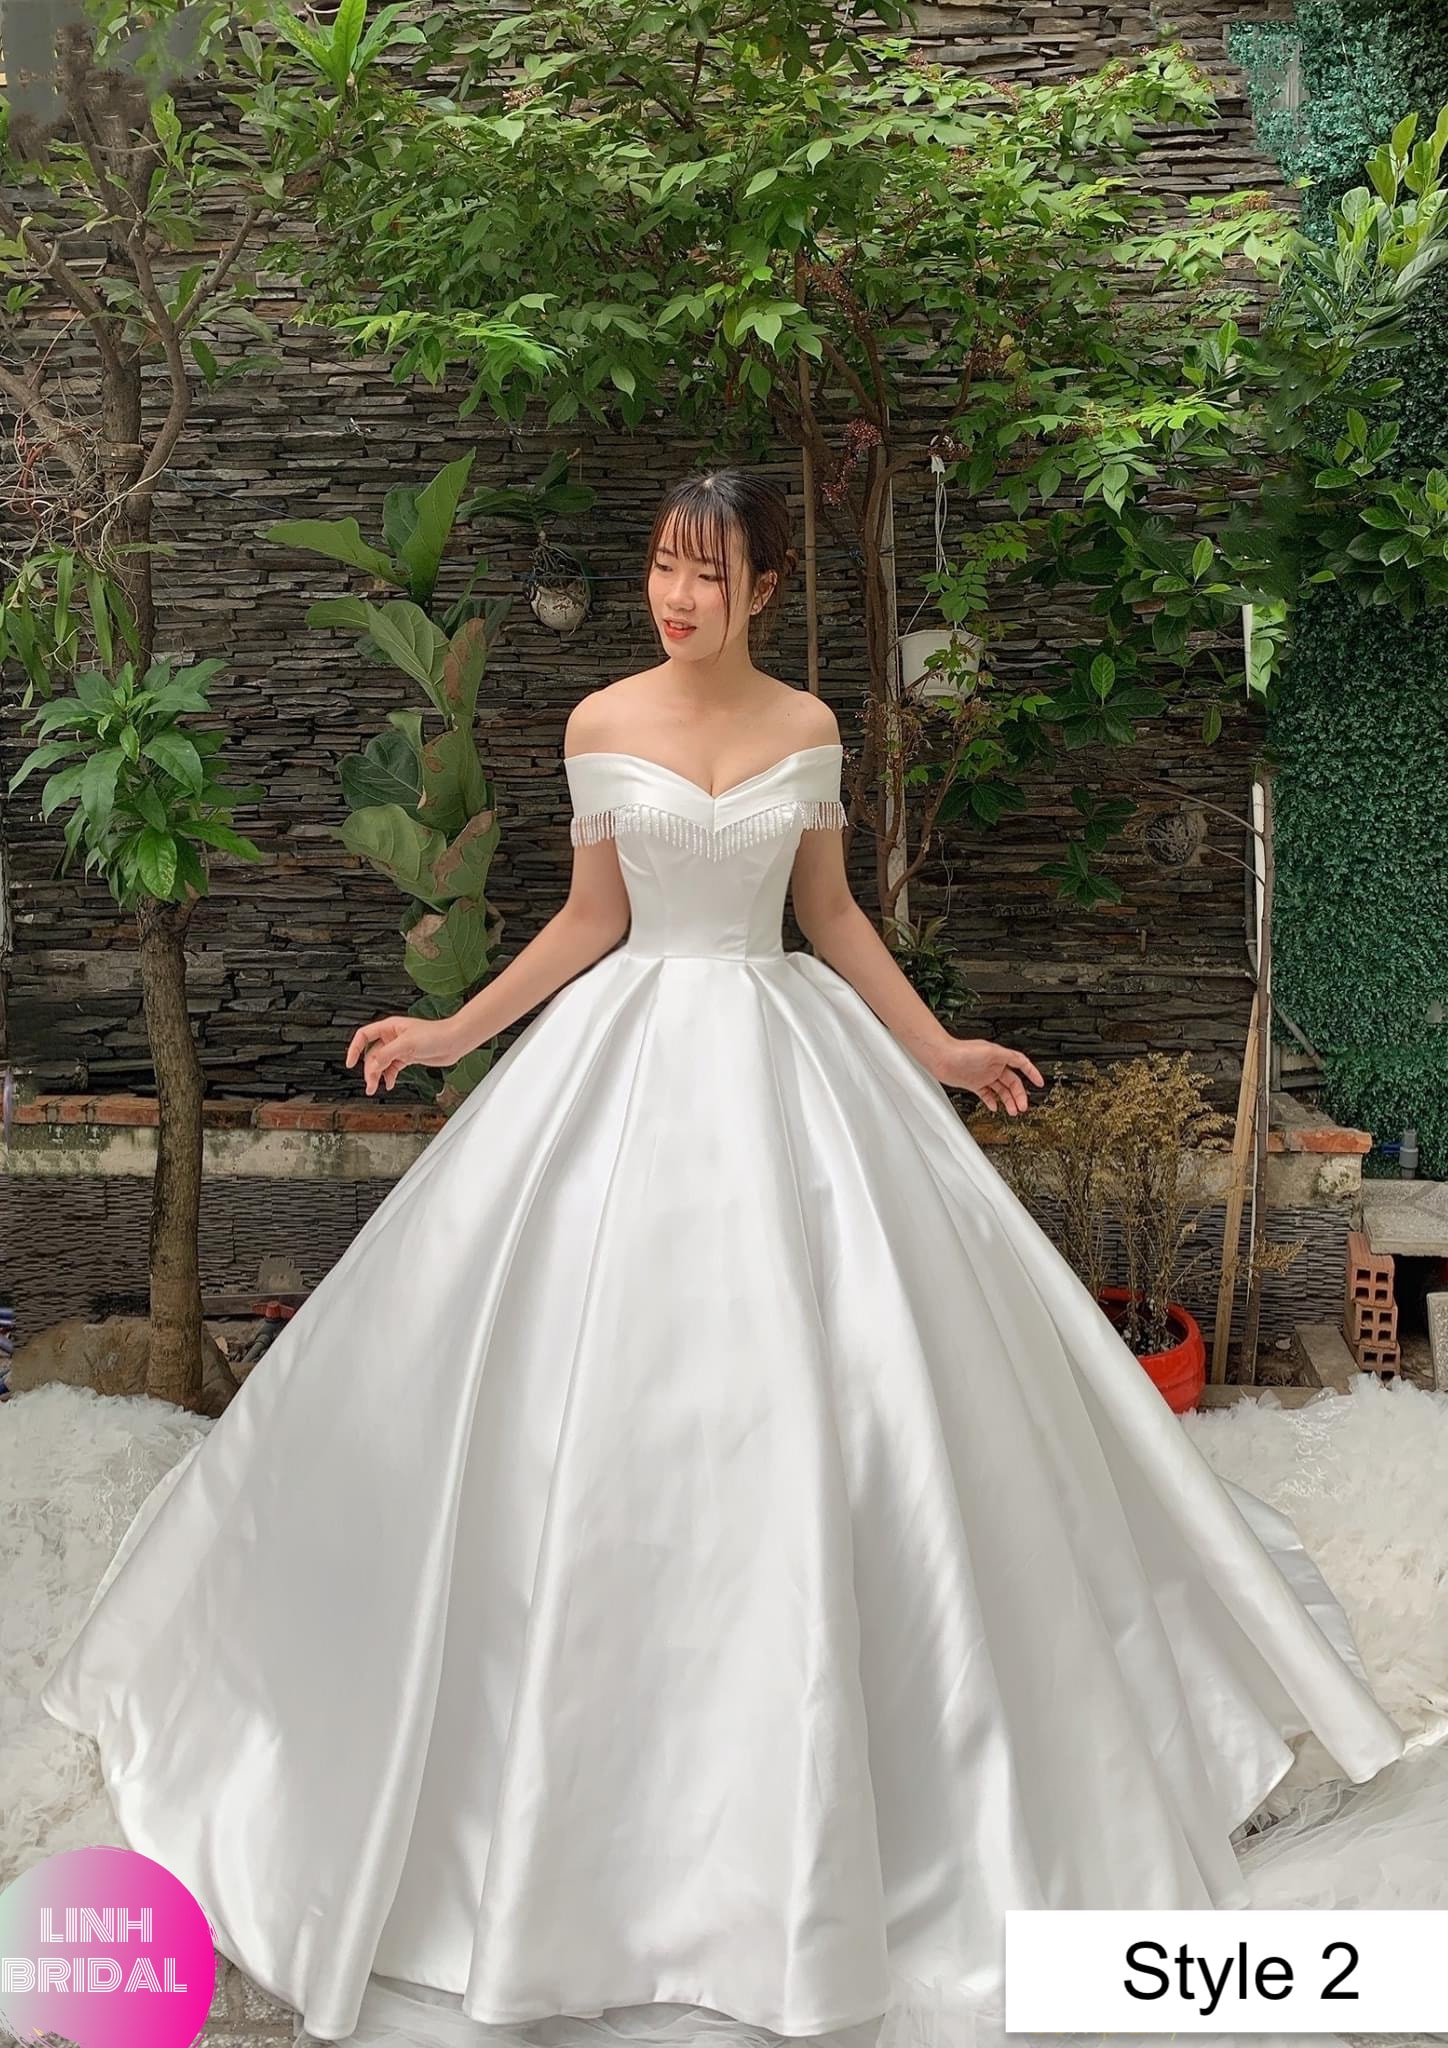 Minimalist white plain off the shoulder satin ball gown wedding dress